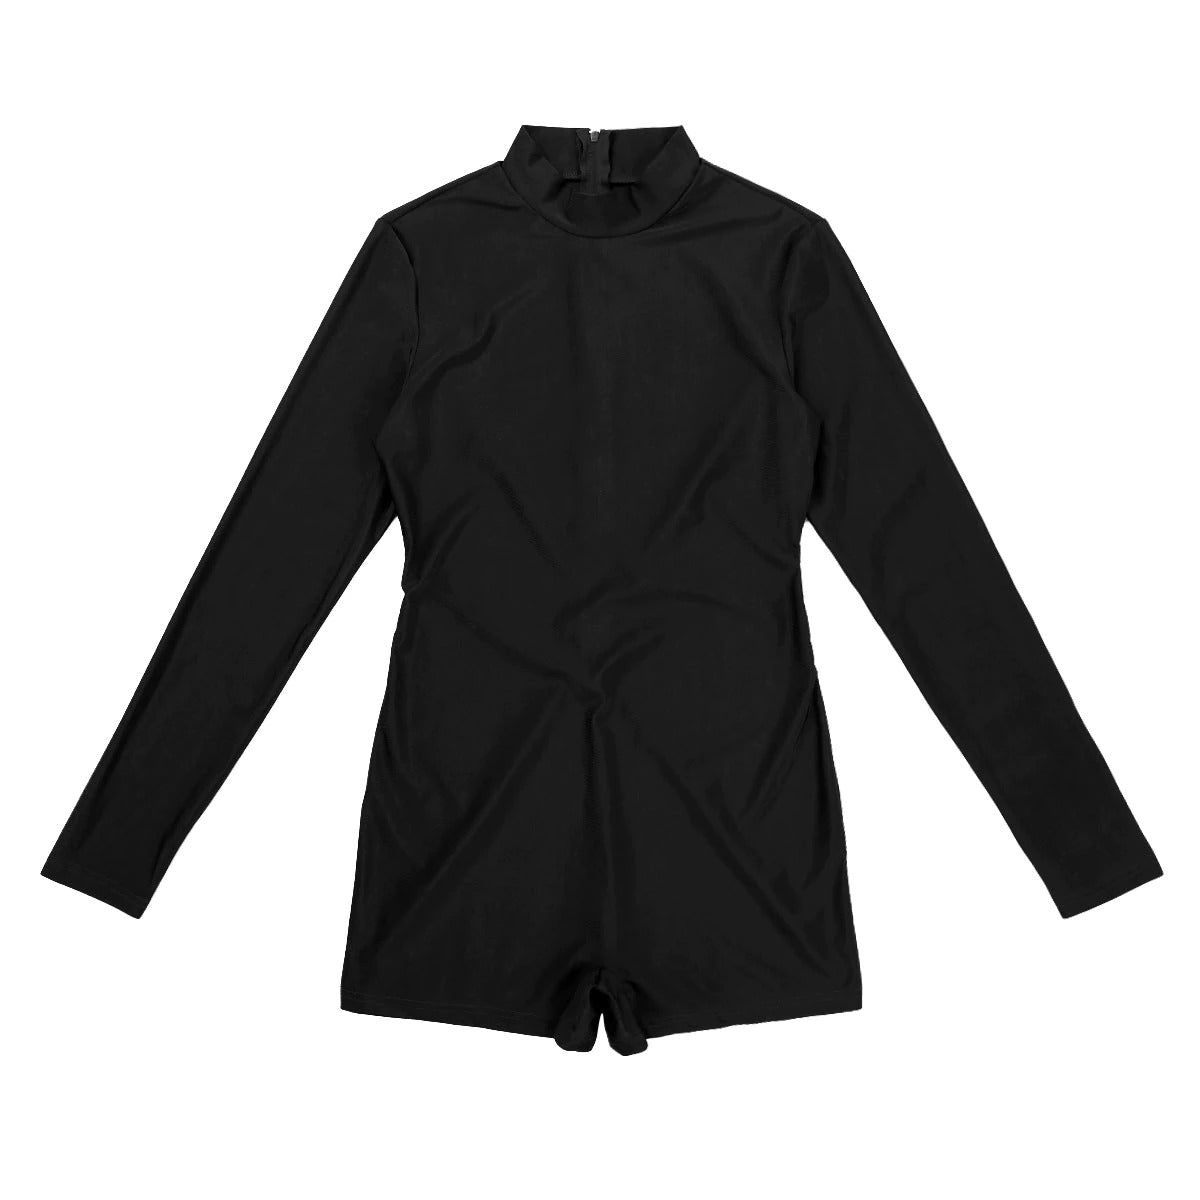 Stretchy Bodysuit for Rock Chick / Black Jumpsuit / Alternative Style Romper - HARD'N'HEAVY